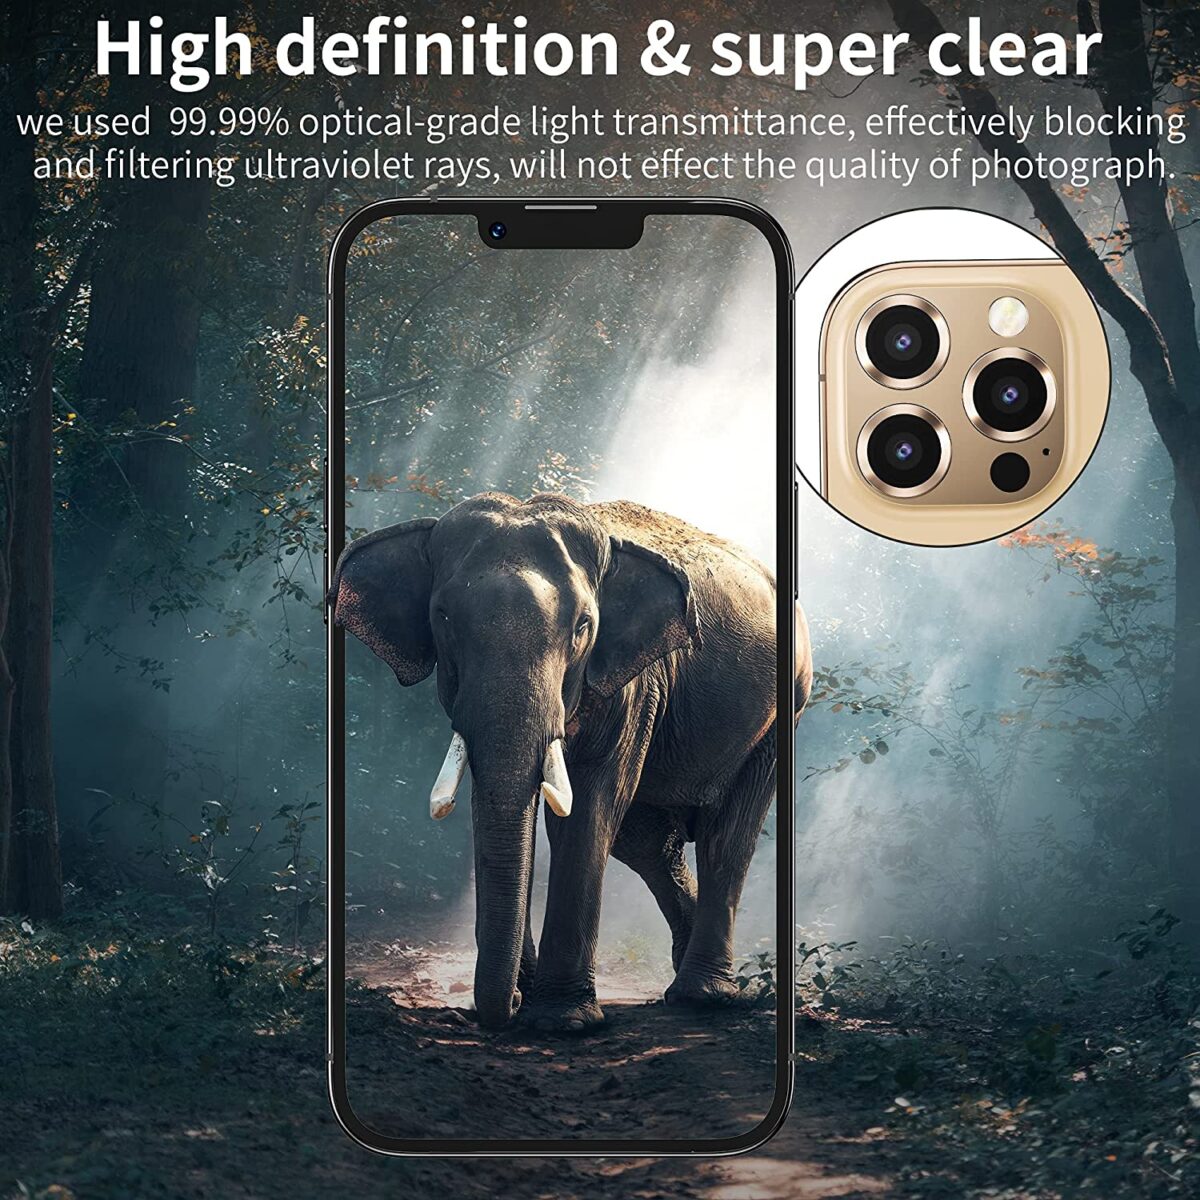 Glass Lens Protectors - iPhone 13 series